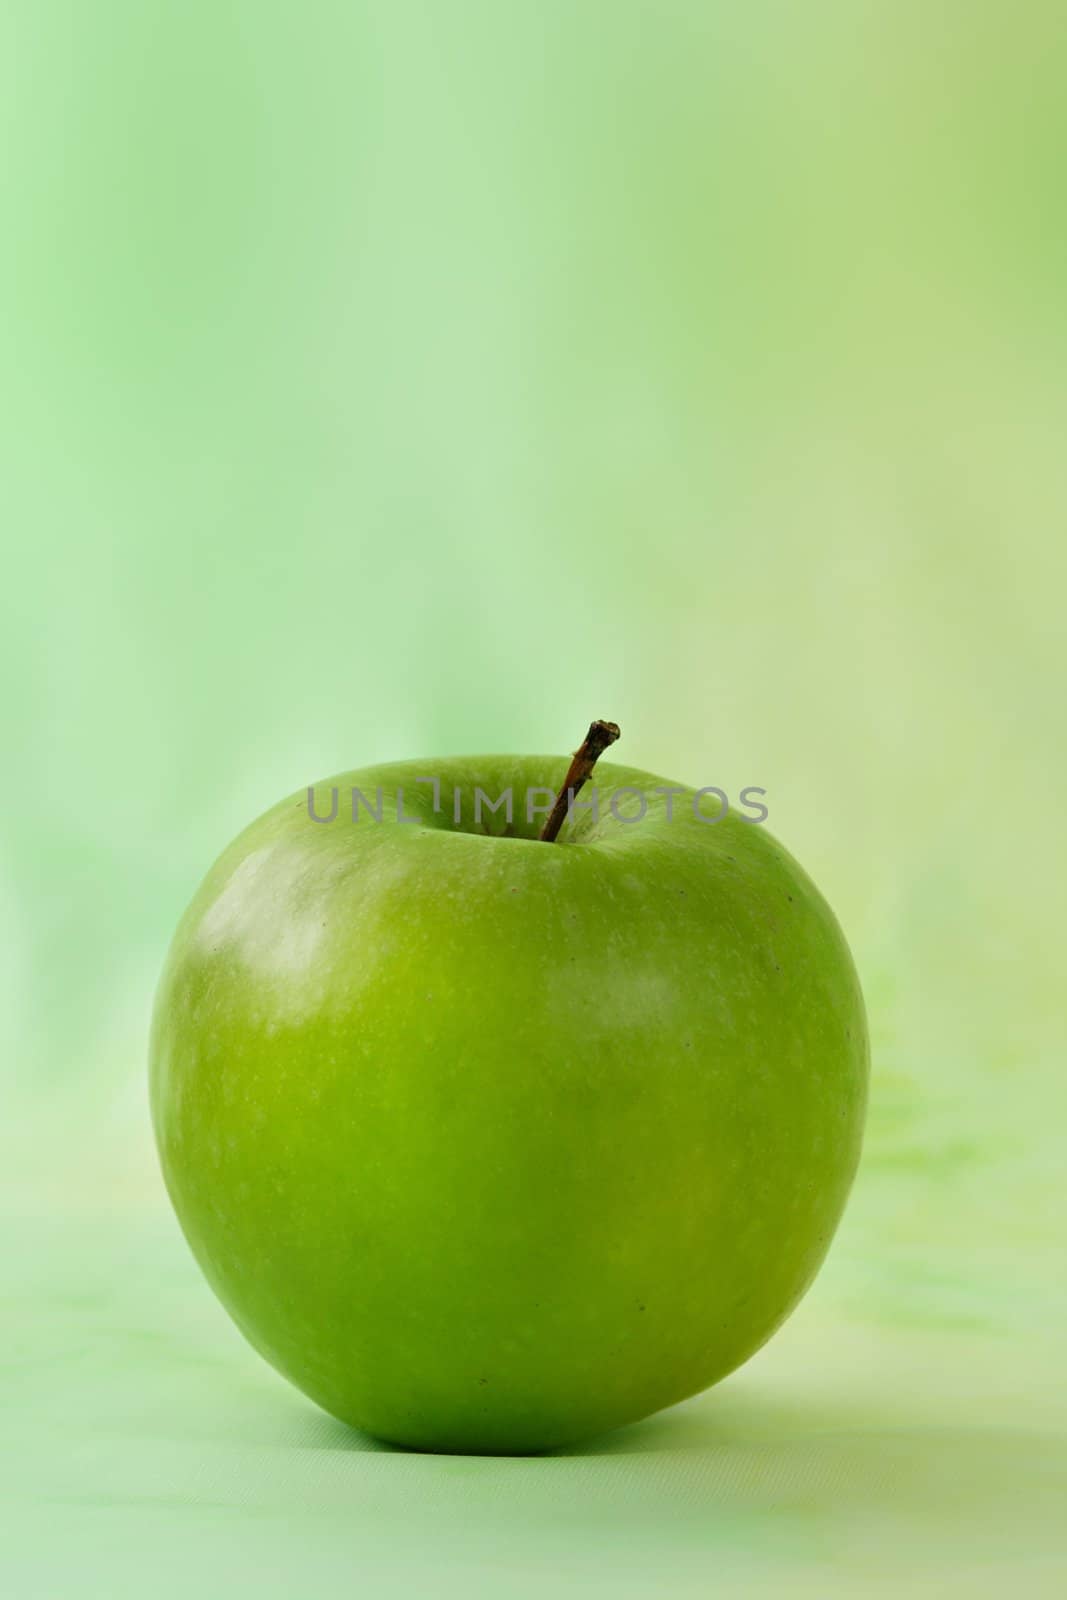 granny smith apple, green background